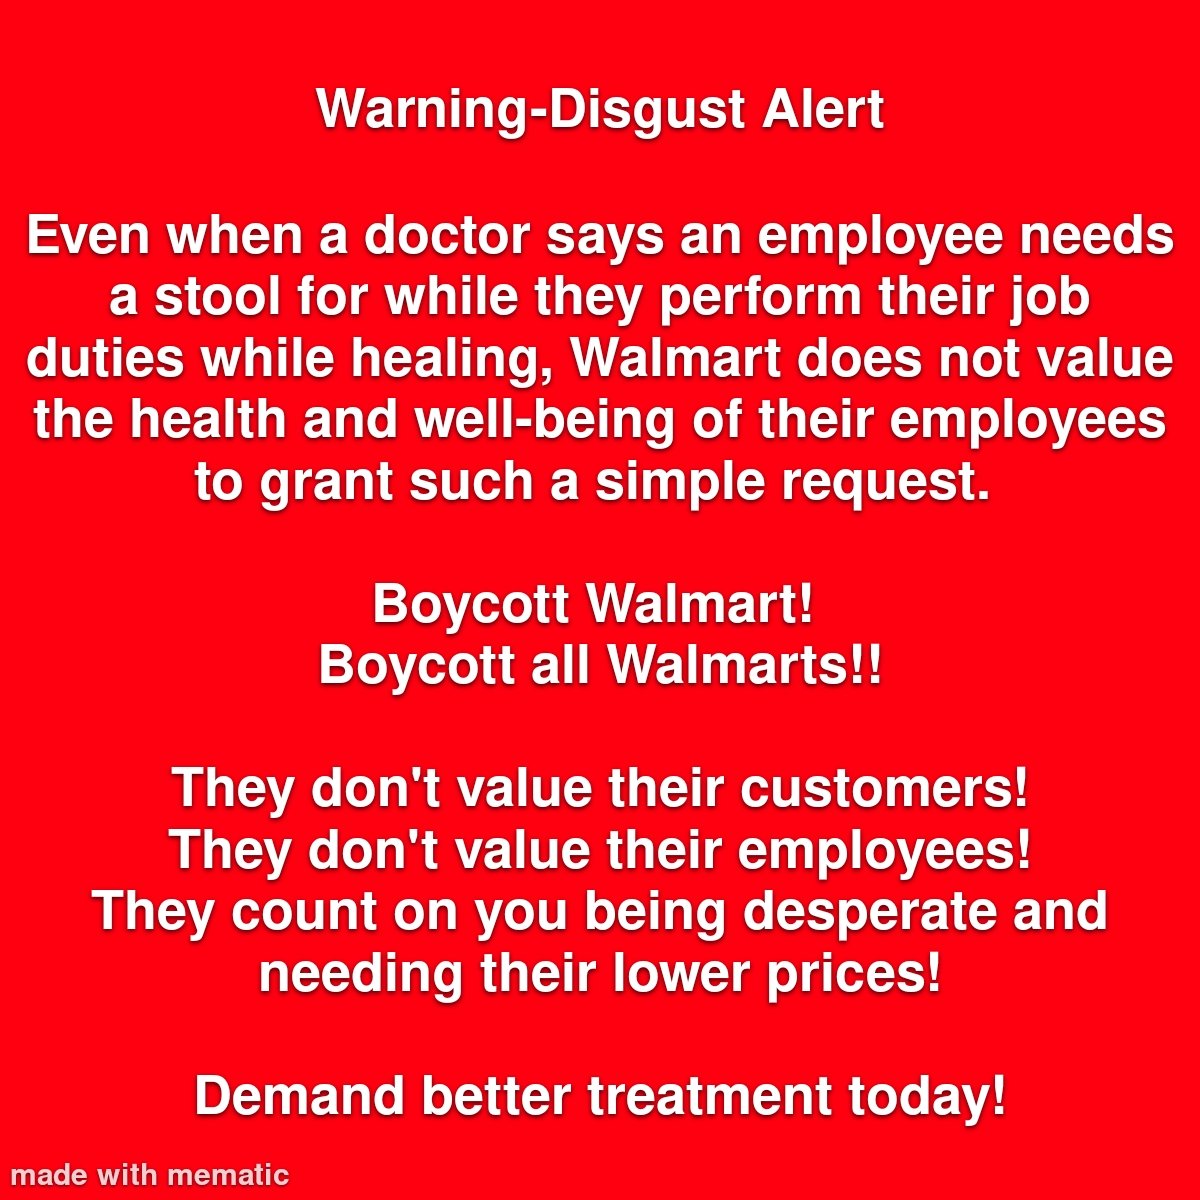 Warning-Disgust Alert

Boycott Walmart! 
Boycott all Walmarts!!

Demand better treatment today!

#walmart #walmartfinds #walmartshopping #Boycott #BoycottWalmart 

@Walmart @walmarthelp @WalmartWorld @WalmartInc @WalmartCanada @WalmartMexico @WalmartAction